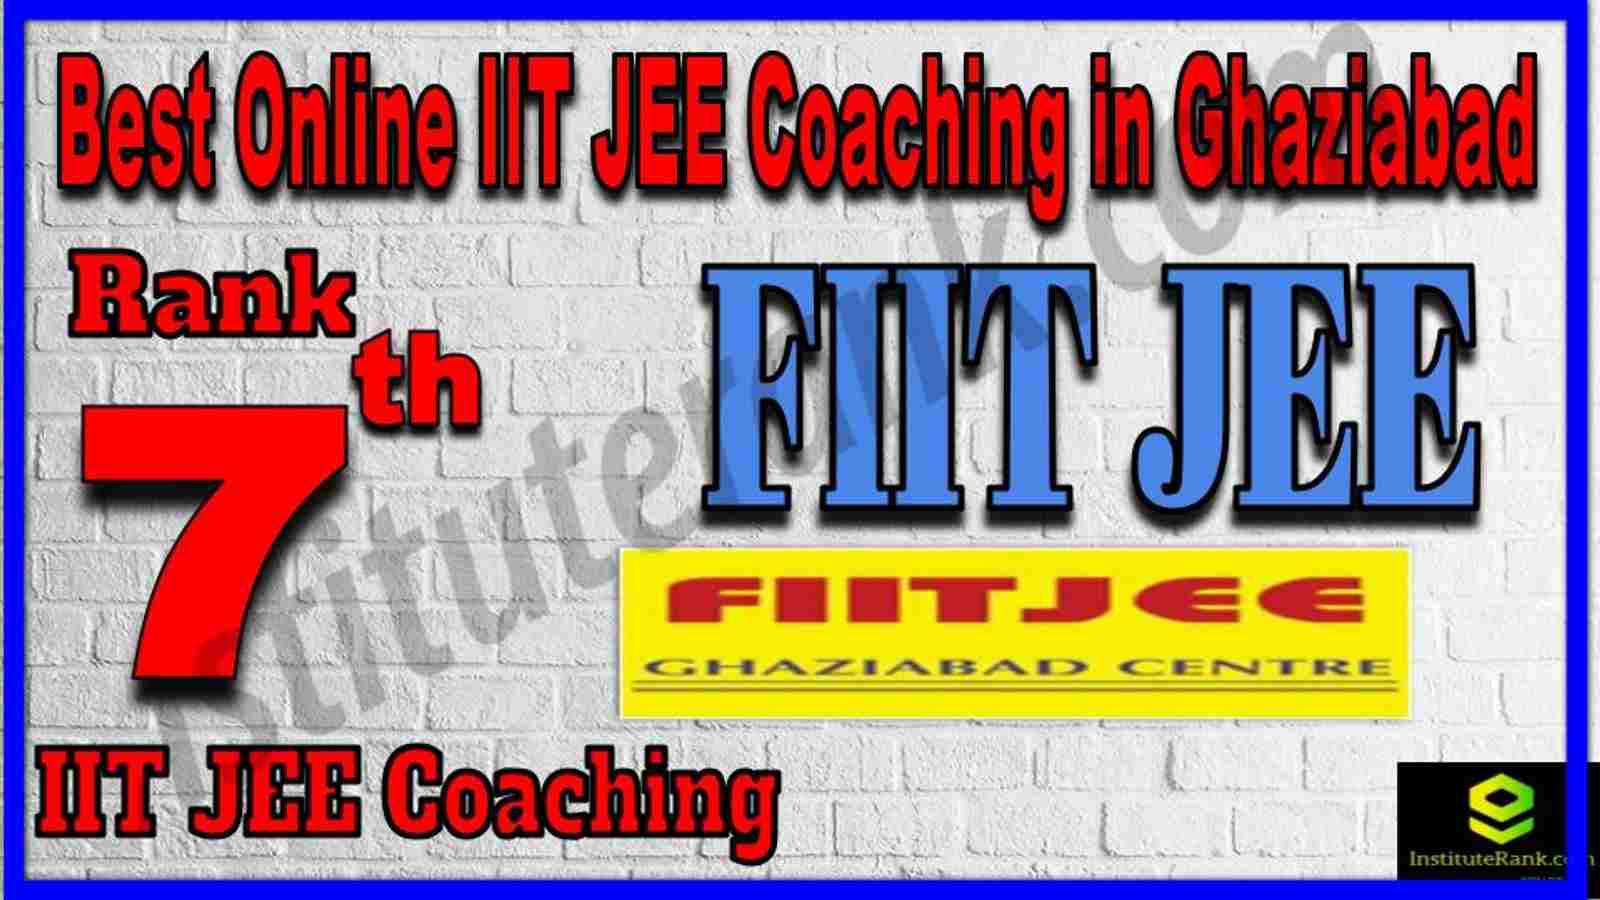 Rank 7th Best Online IIT JEE Coaching in Ghaziabad